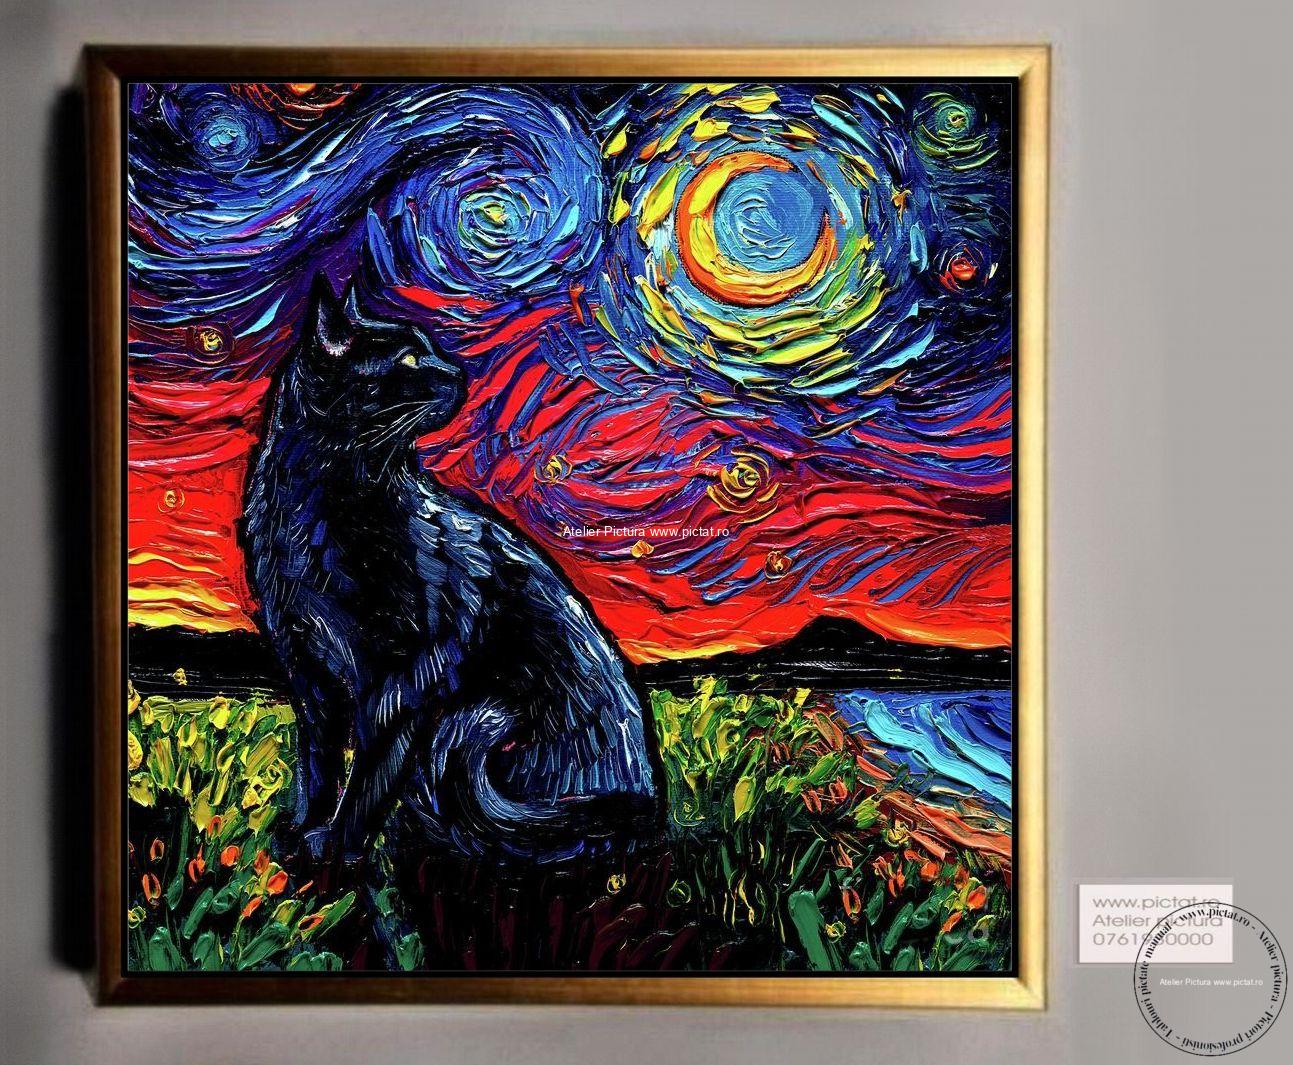 Tablouri pictate manual Tablou abstract multicolor, Tablou cu pisica, peisaj van gogh